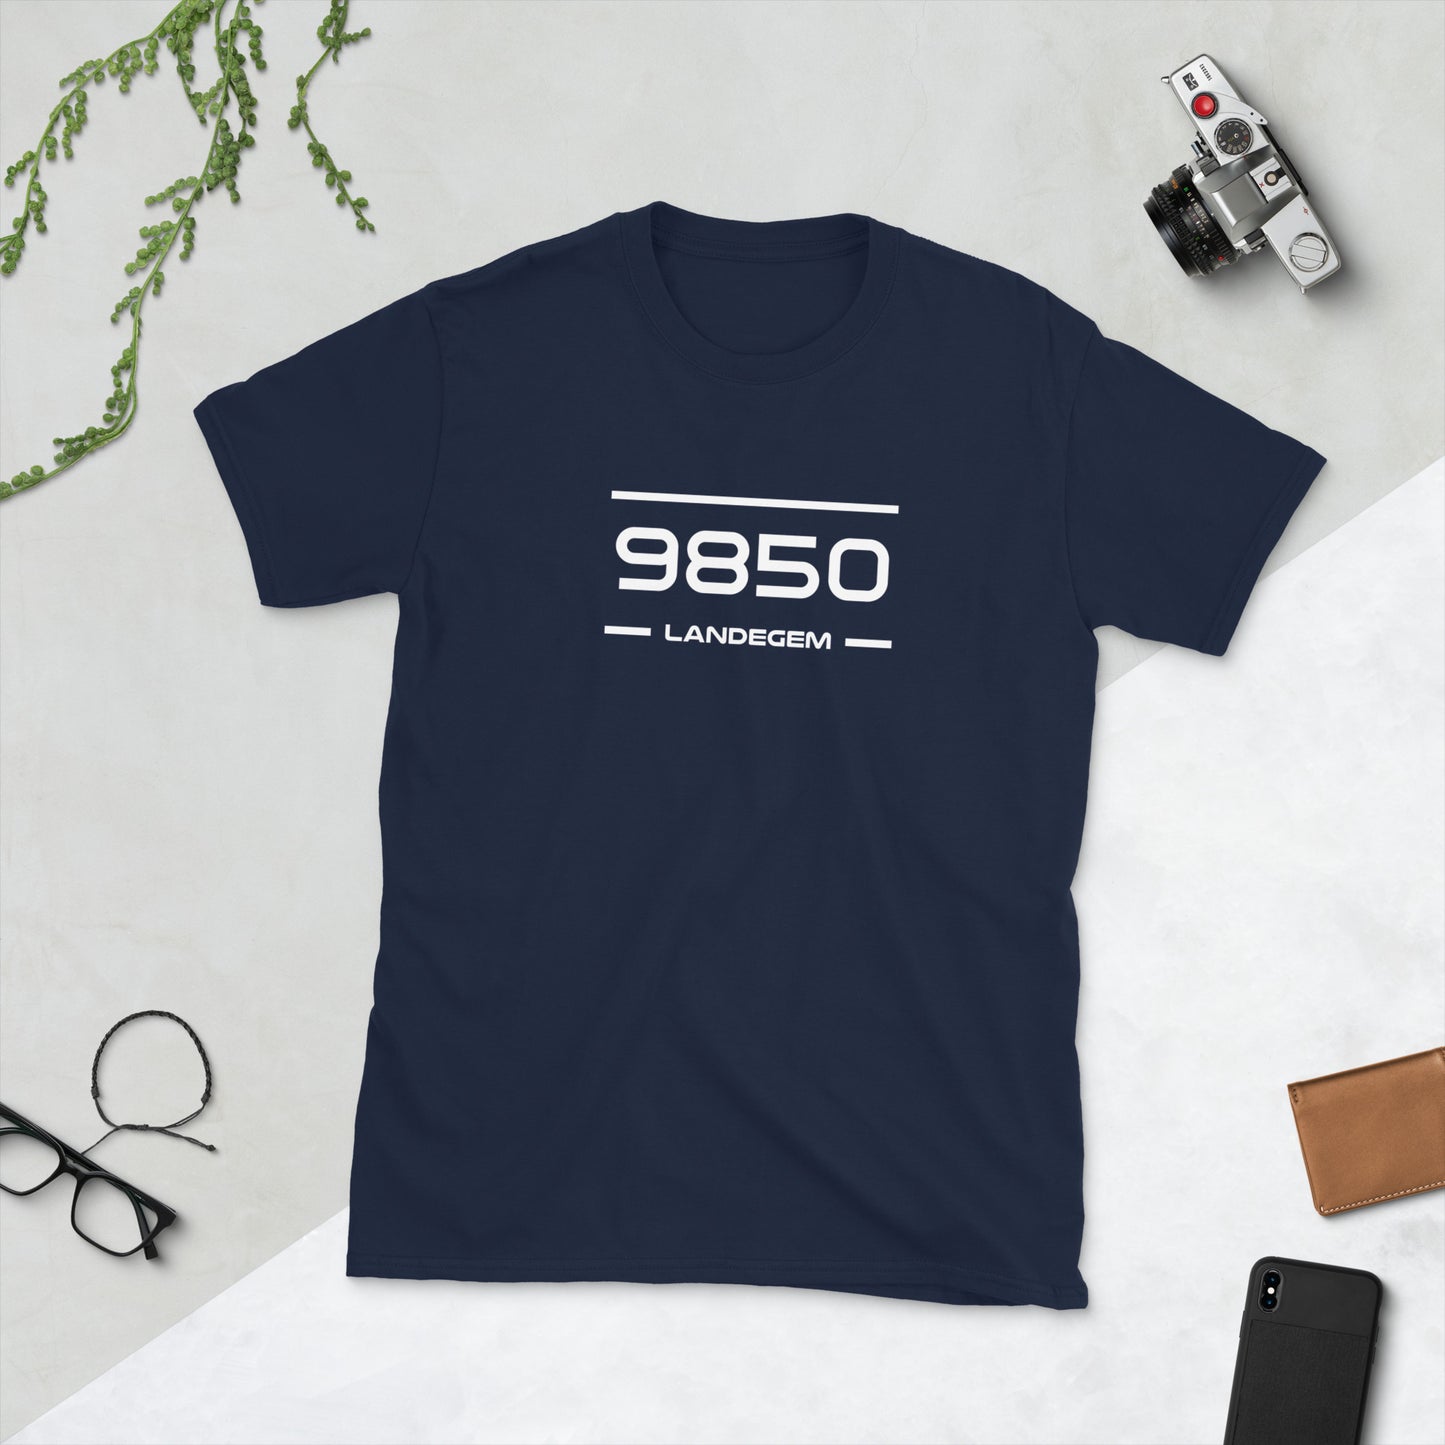 Tshirt - 9850 - Landegem